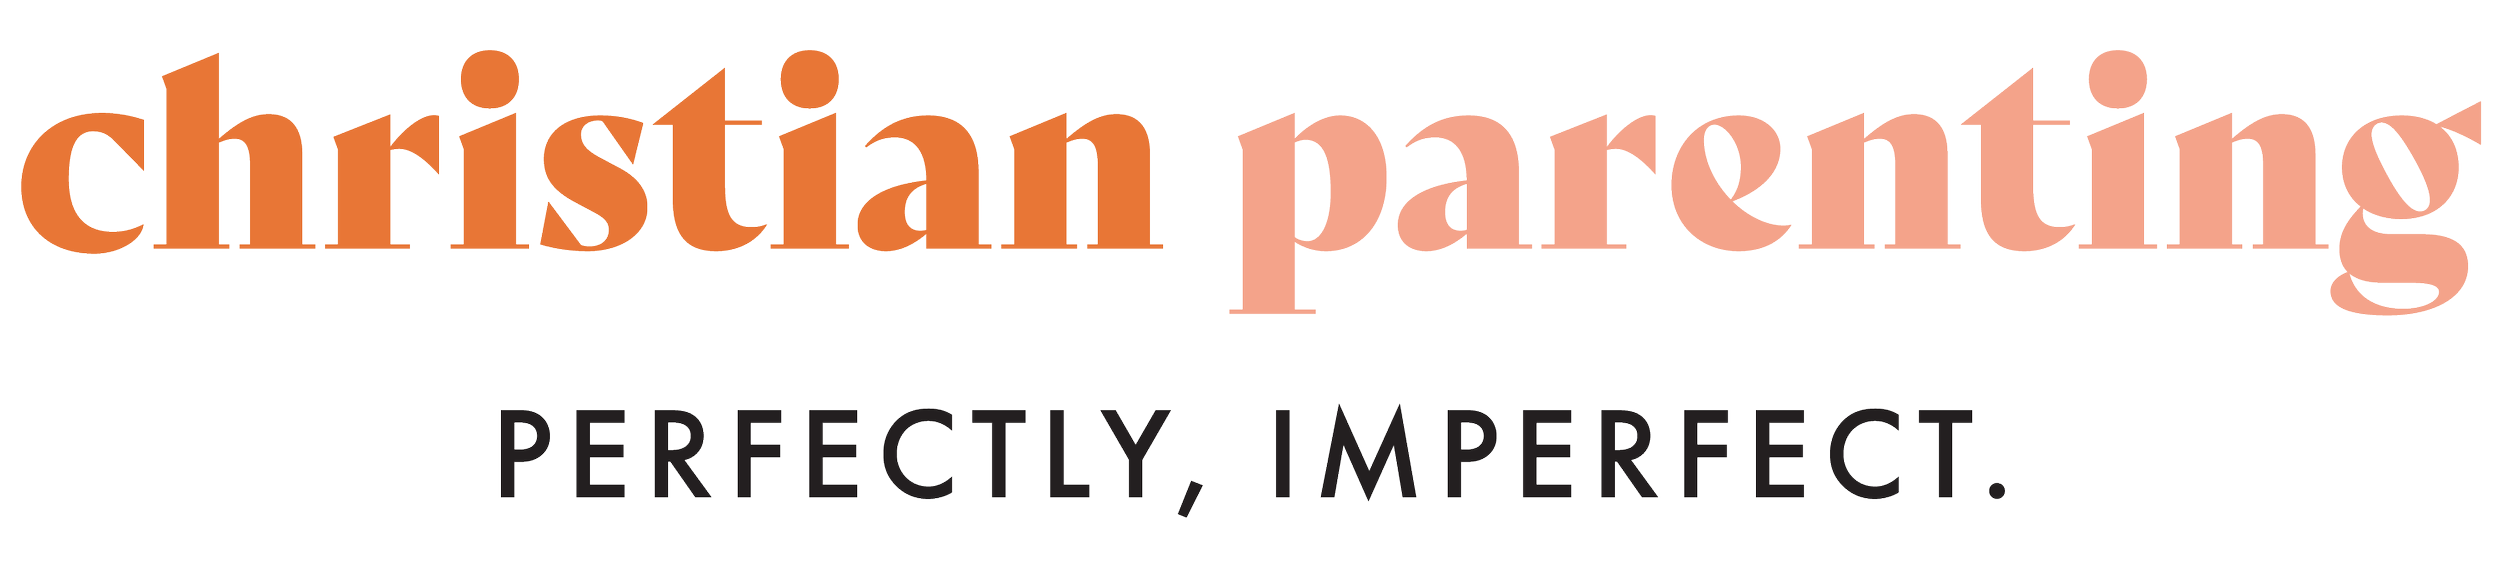 Christian Parenting Logo.png